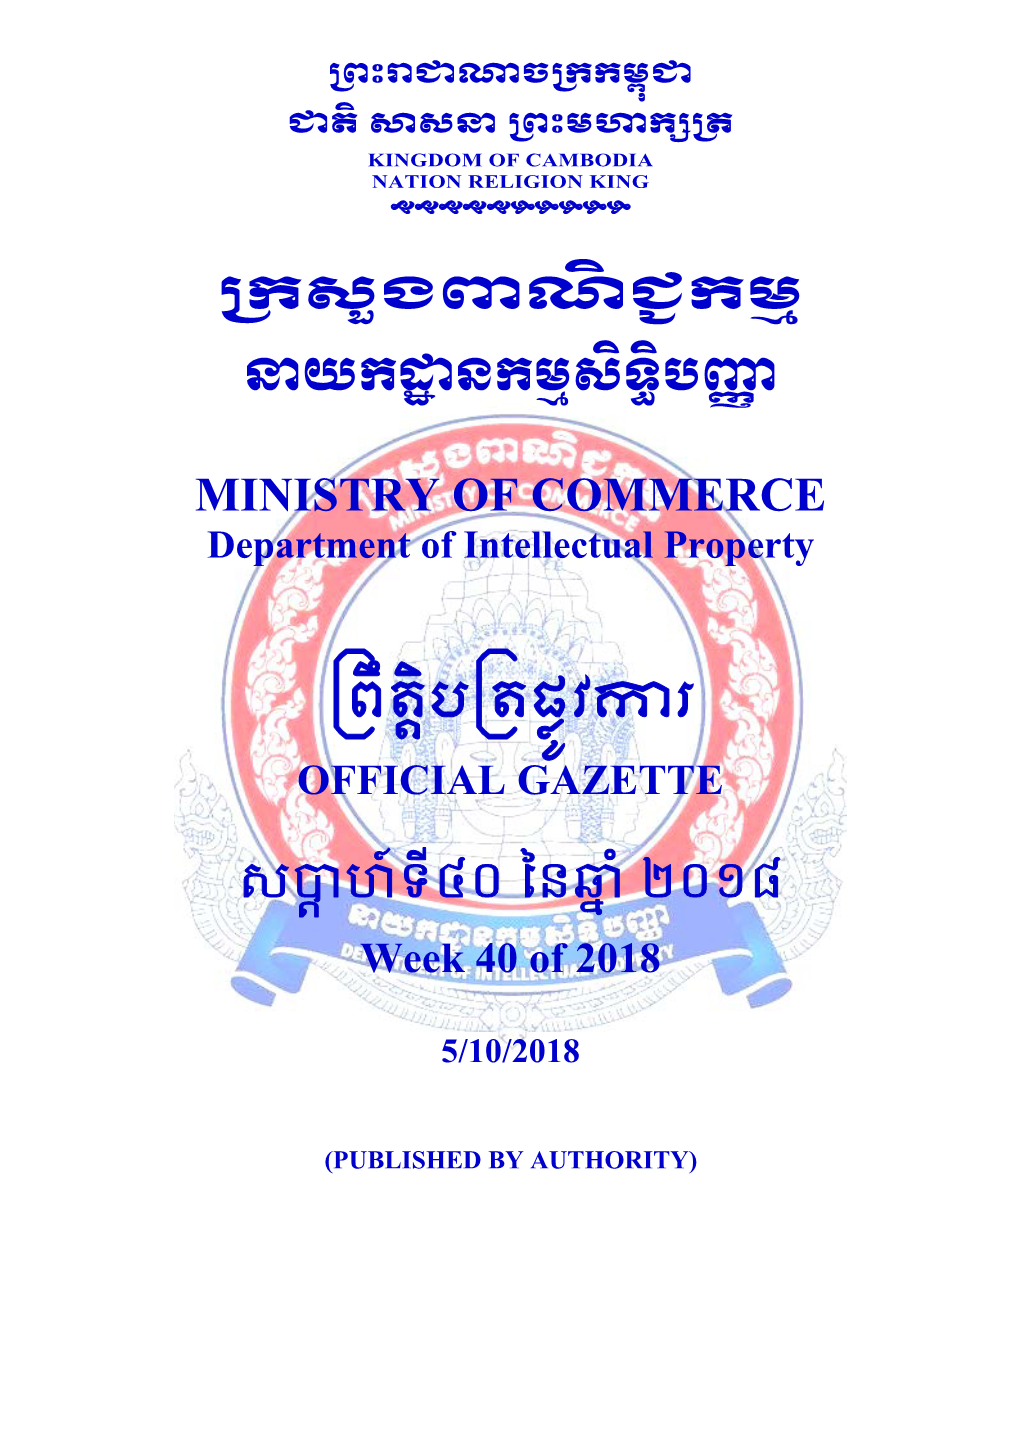 Khan Mean Chey Phnom Penh, Cambodia 5- Cambodia 6- MEAS VASNA INVESTMENT PRODUCTION CO., LTD